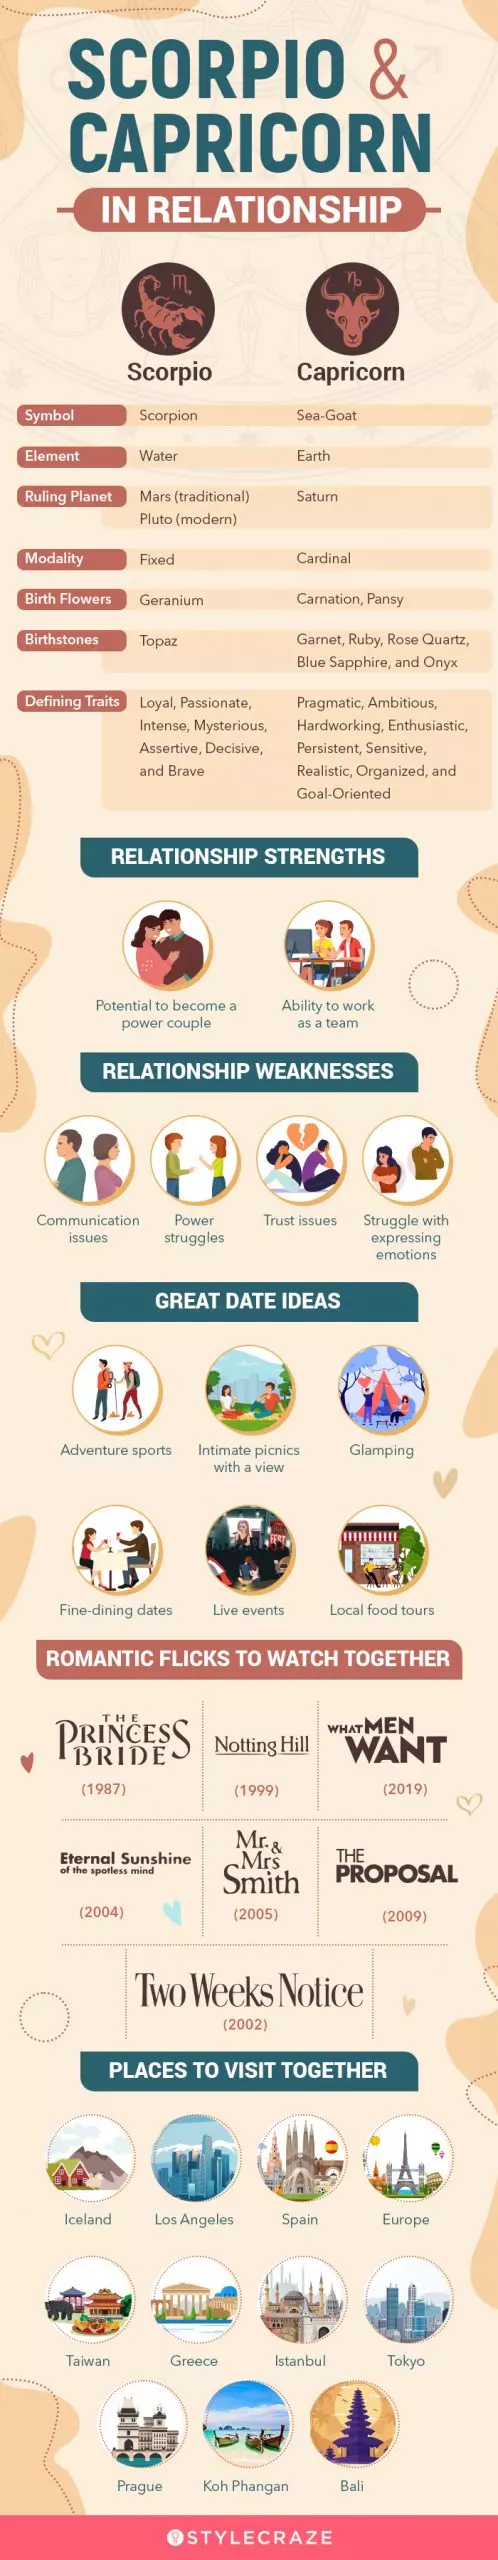 scorpio and capricorn in relationship (infographic)